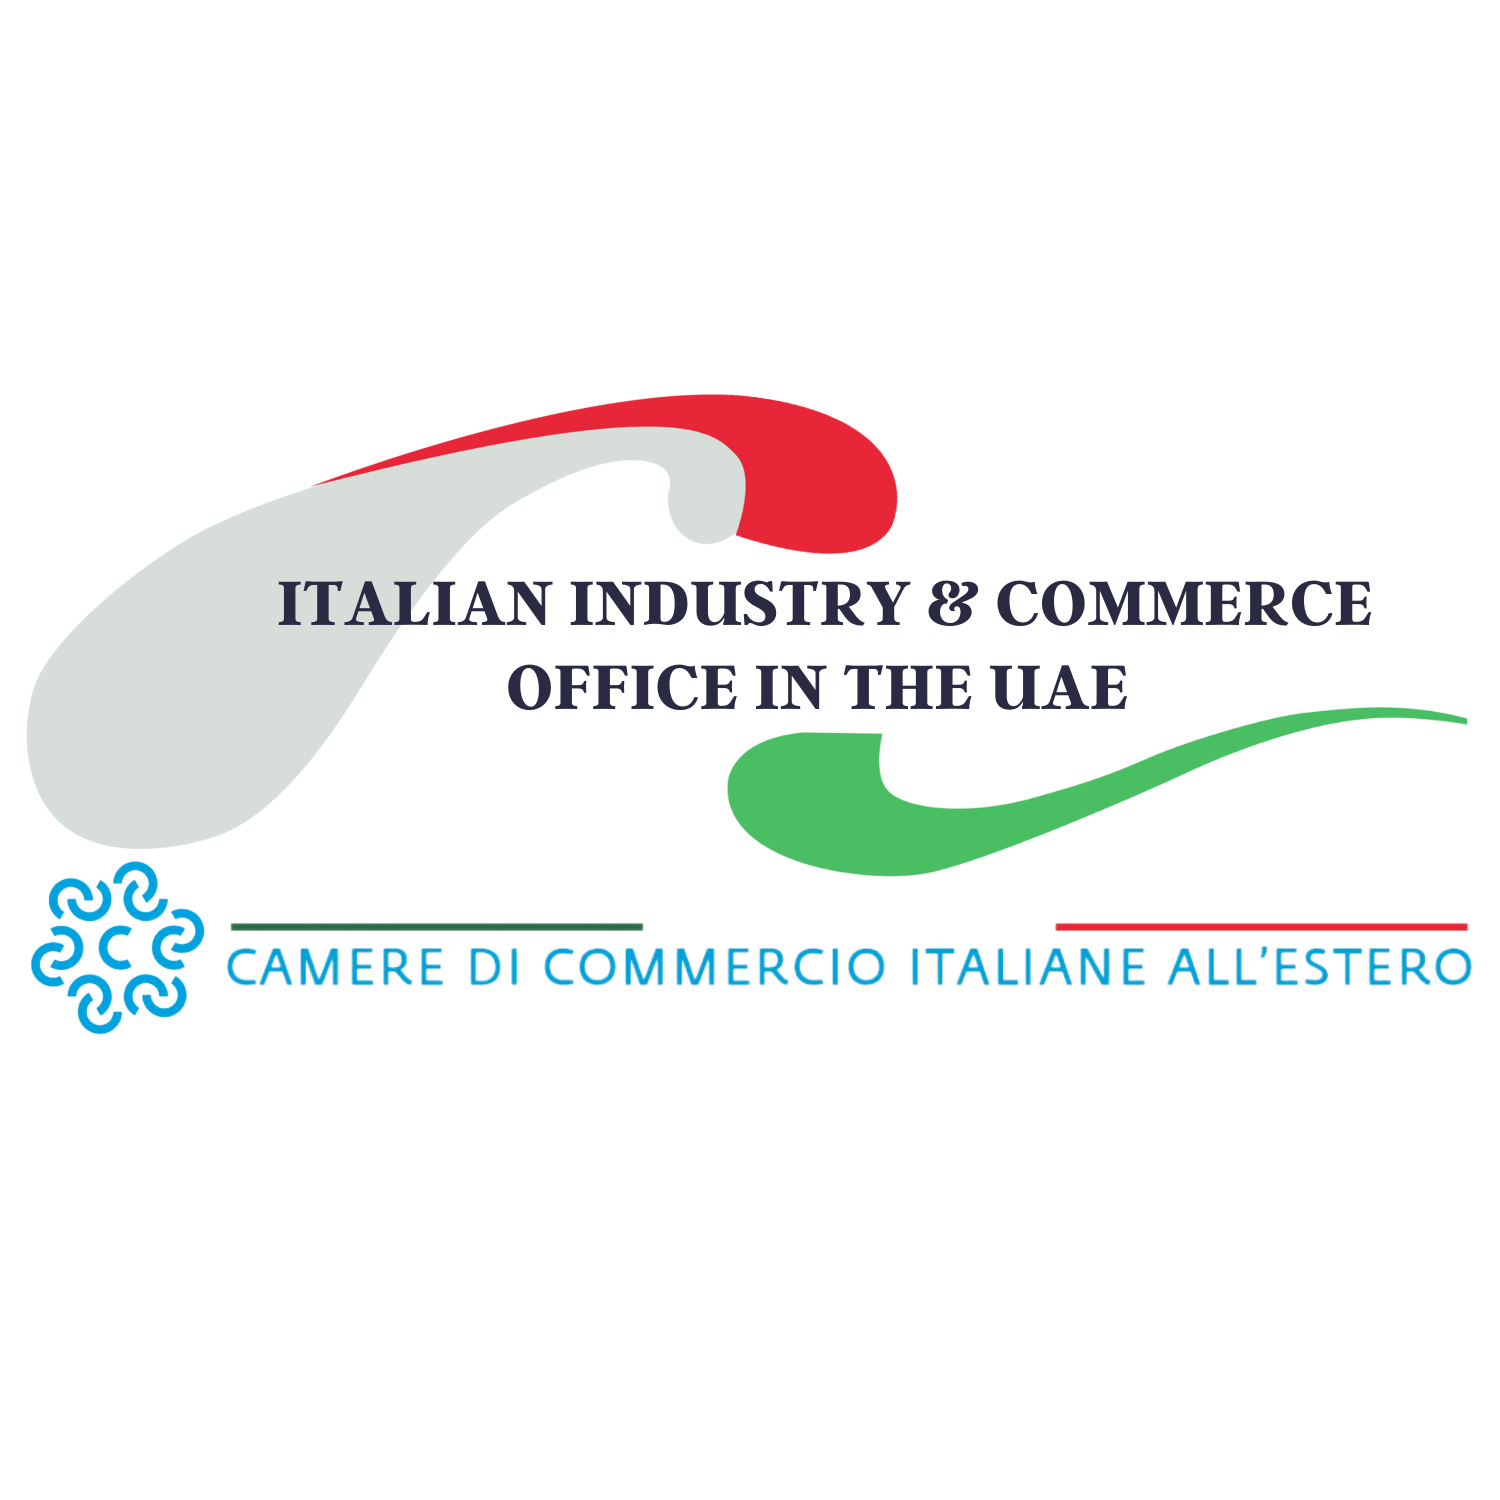 ITALIAN INDUSTRY & COMMERCE OFFICE IN THE UAE